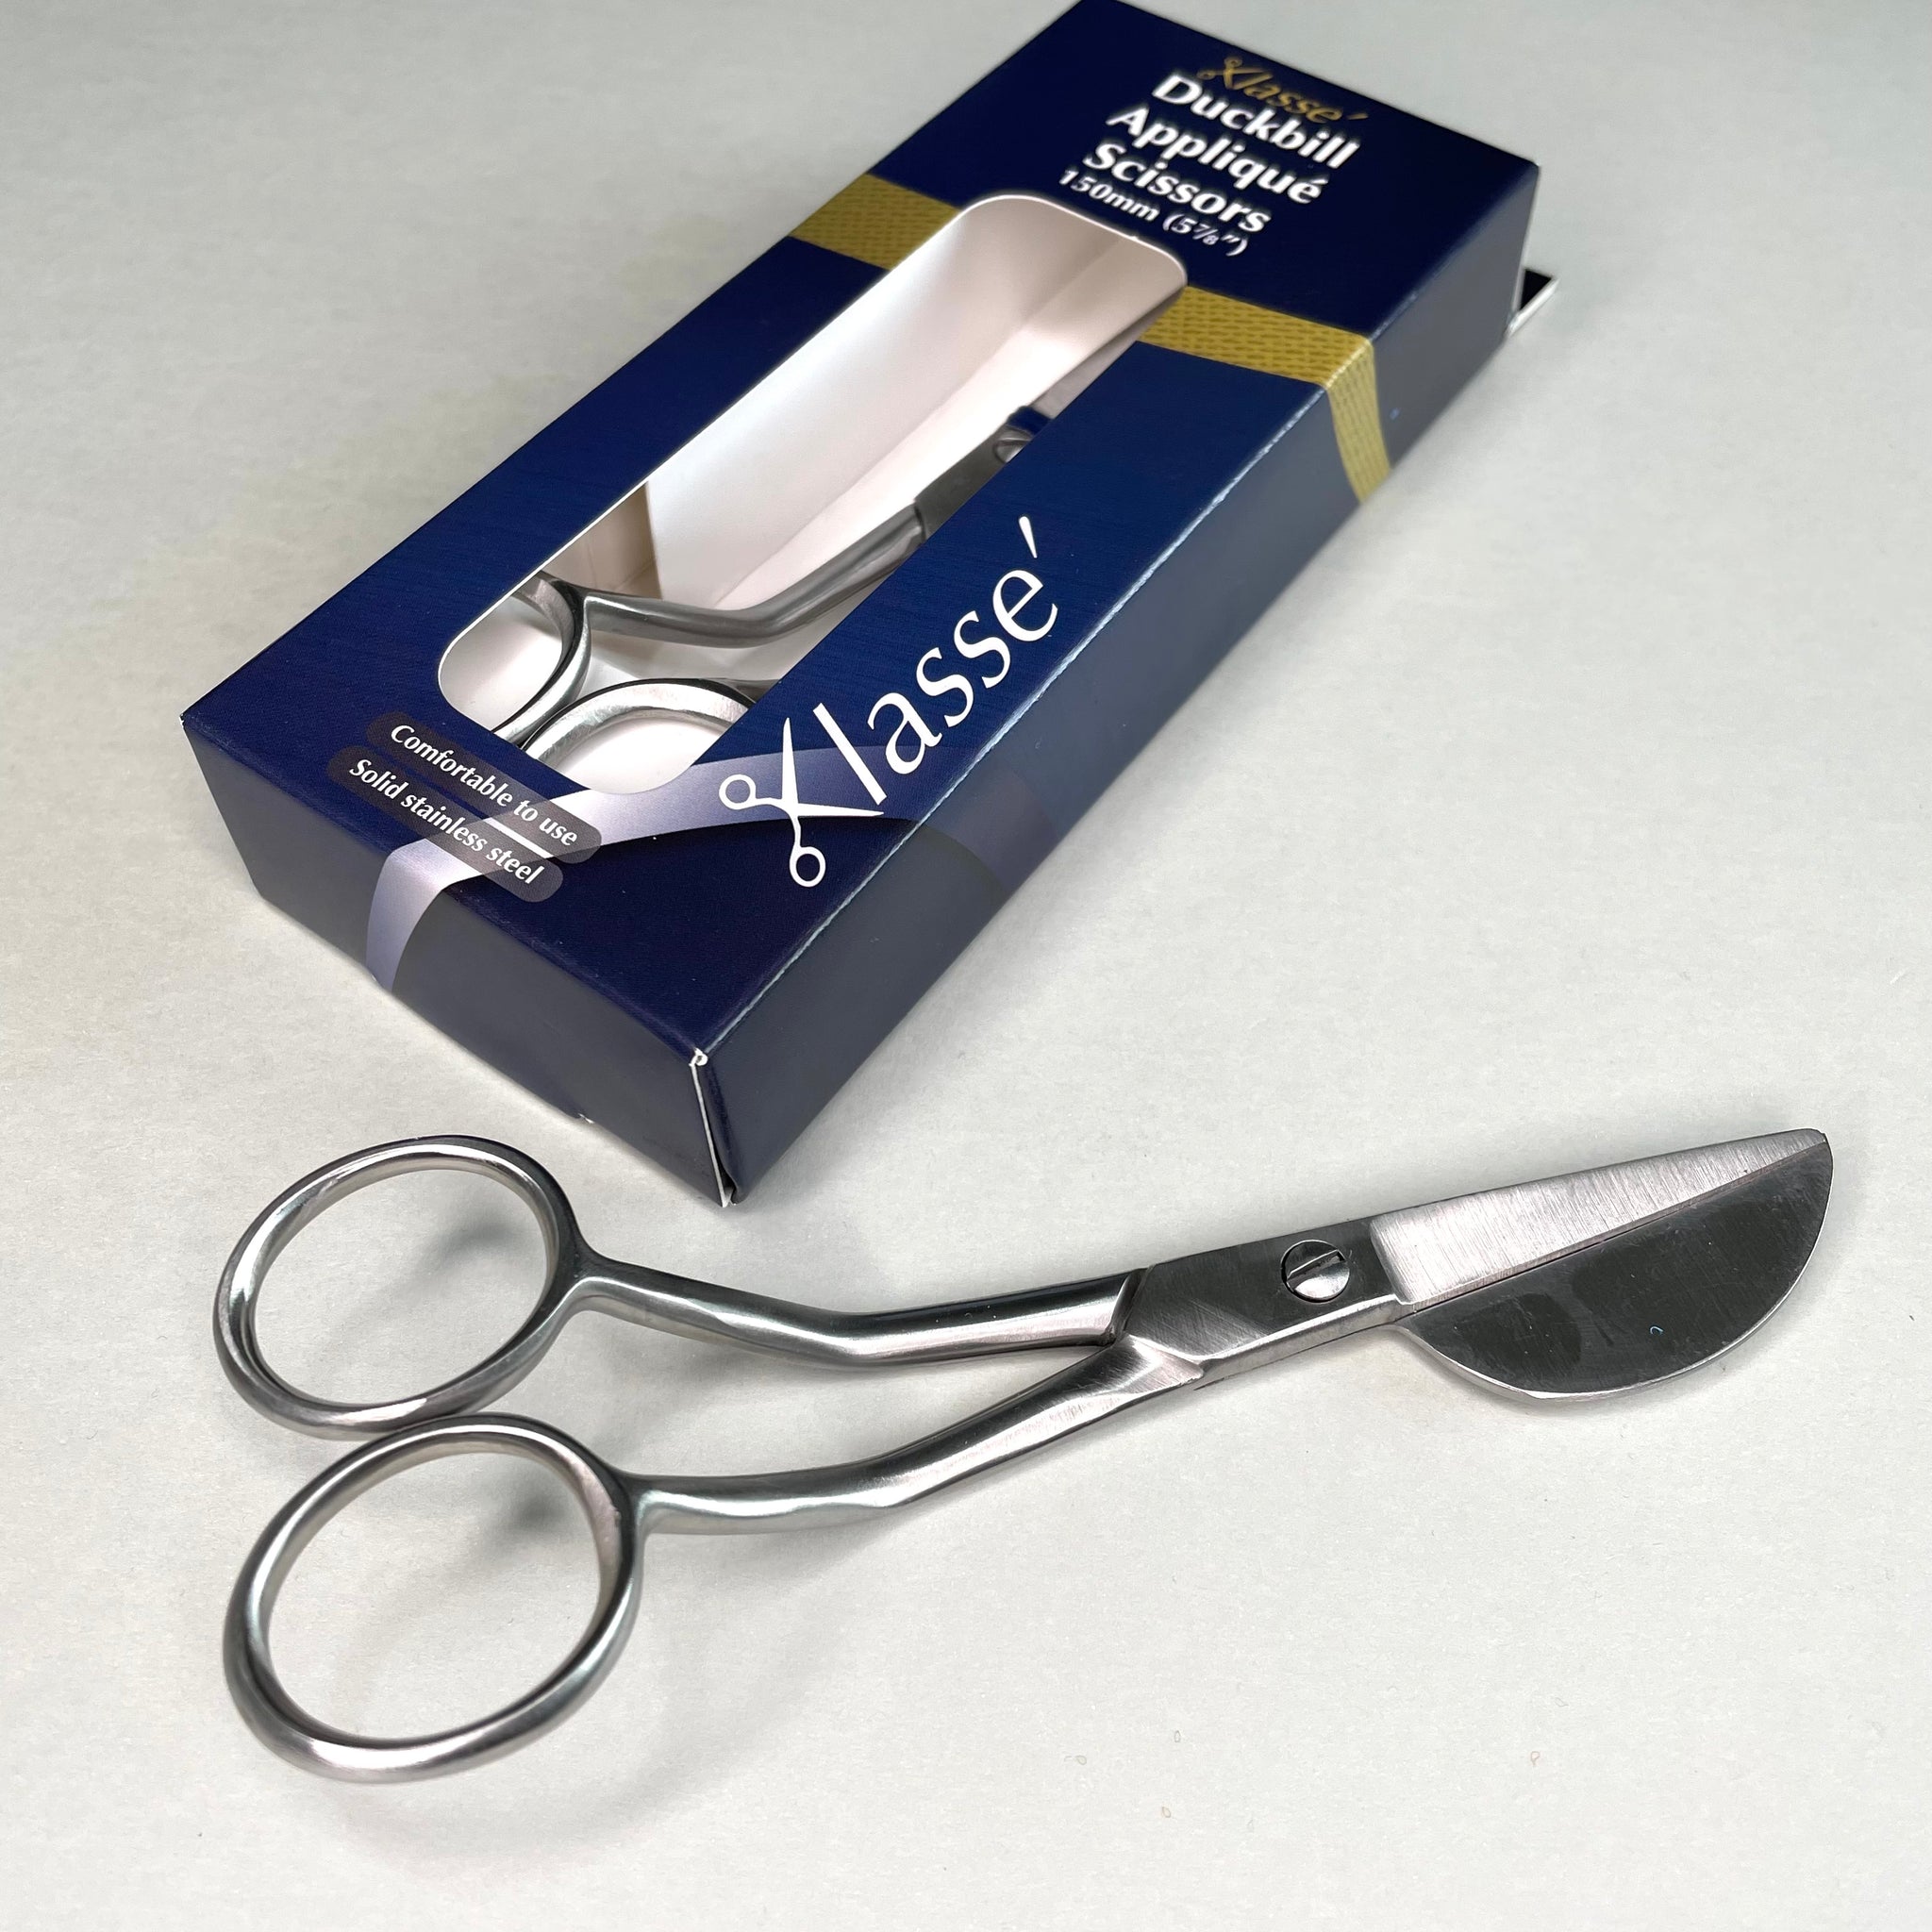 Duckbill Appliqué Scissors